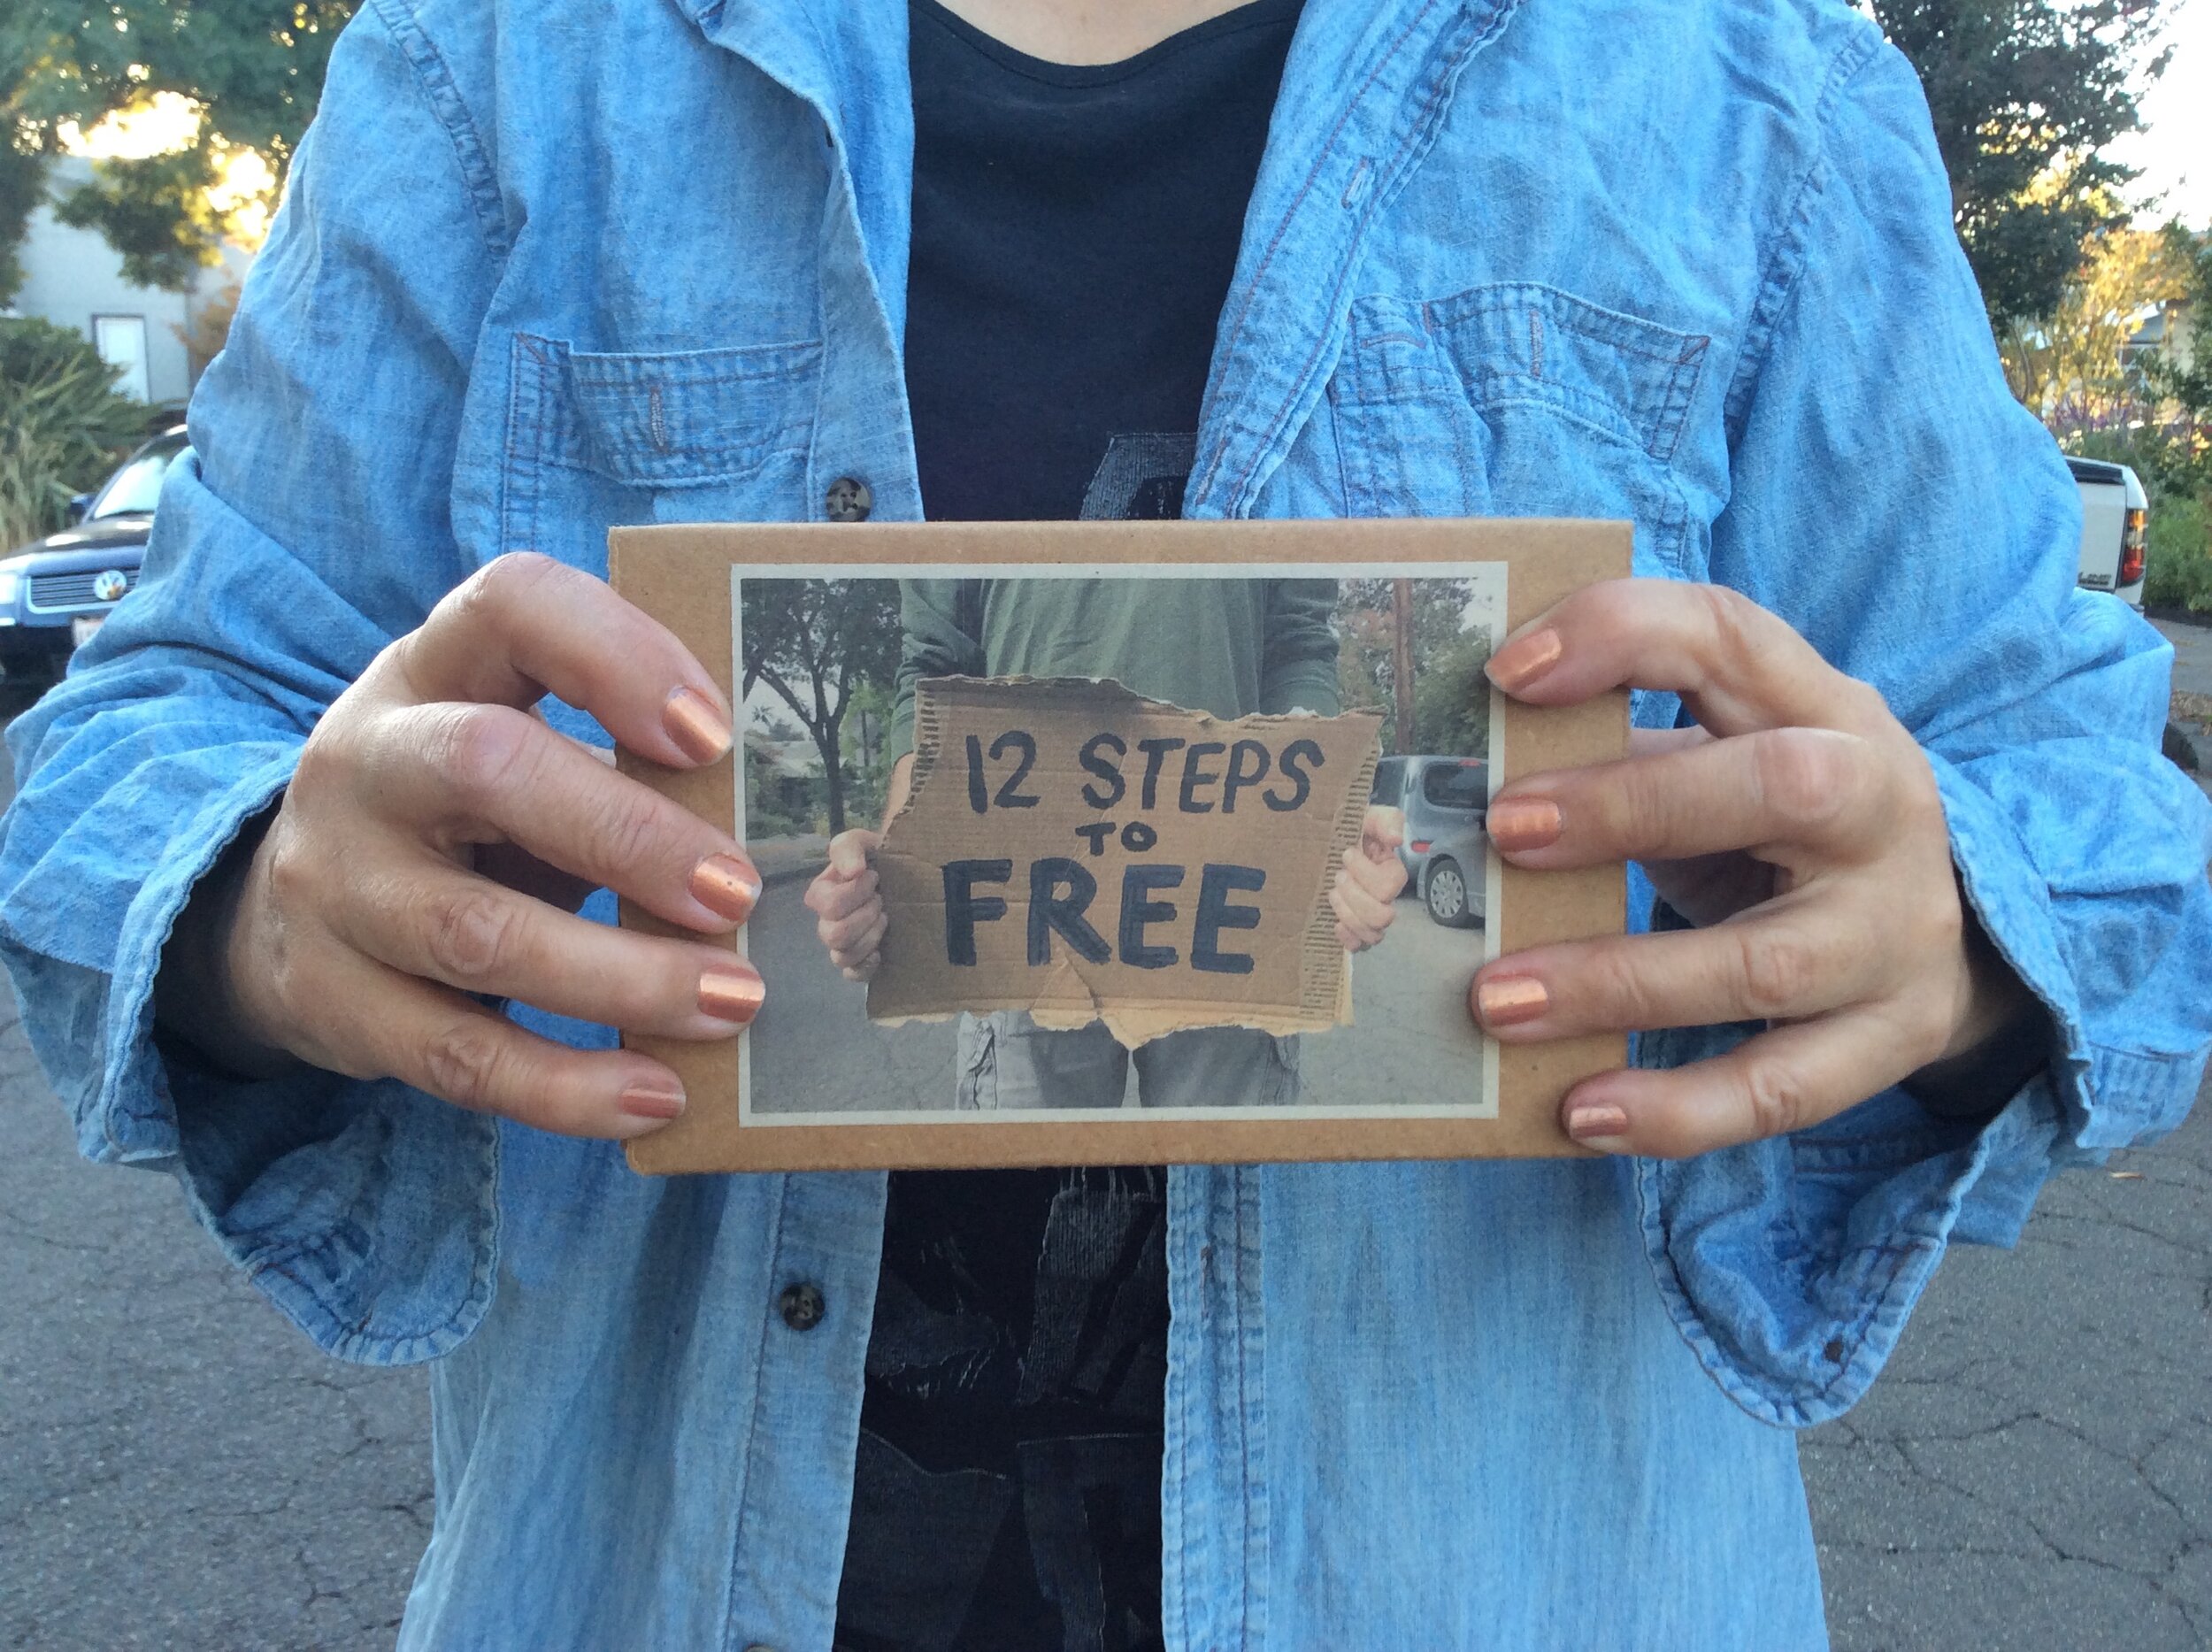 PHOTO 12 steps to free CKI hands - IMG_3025.JPG